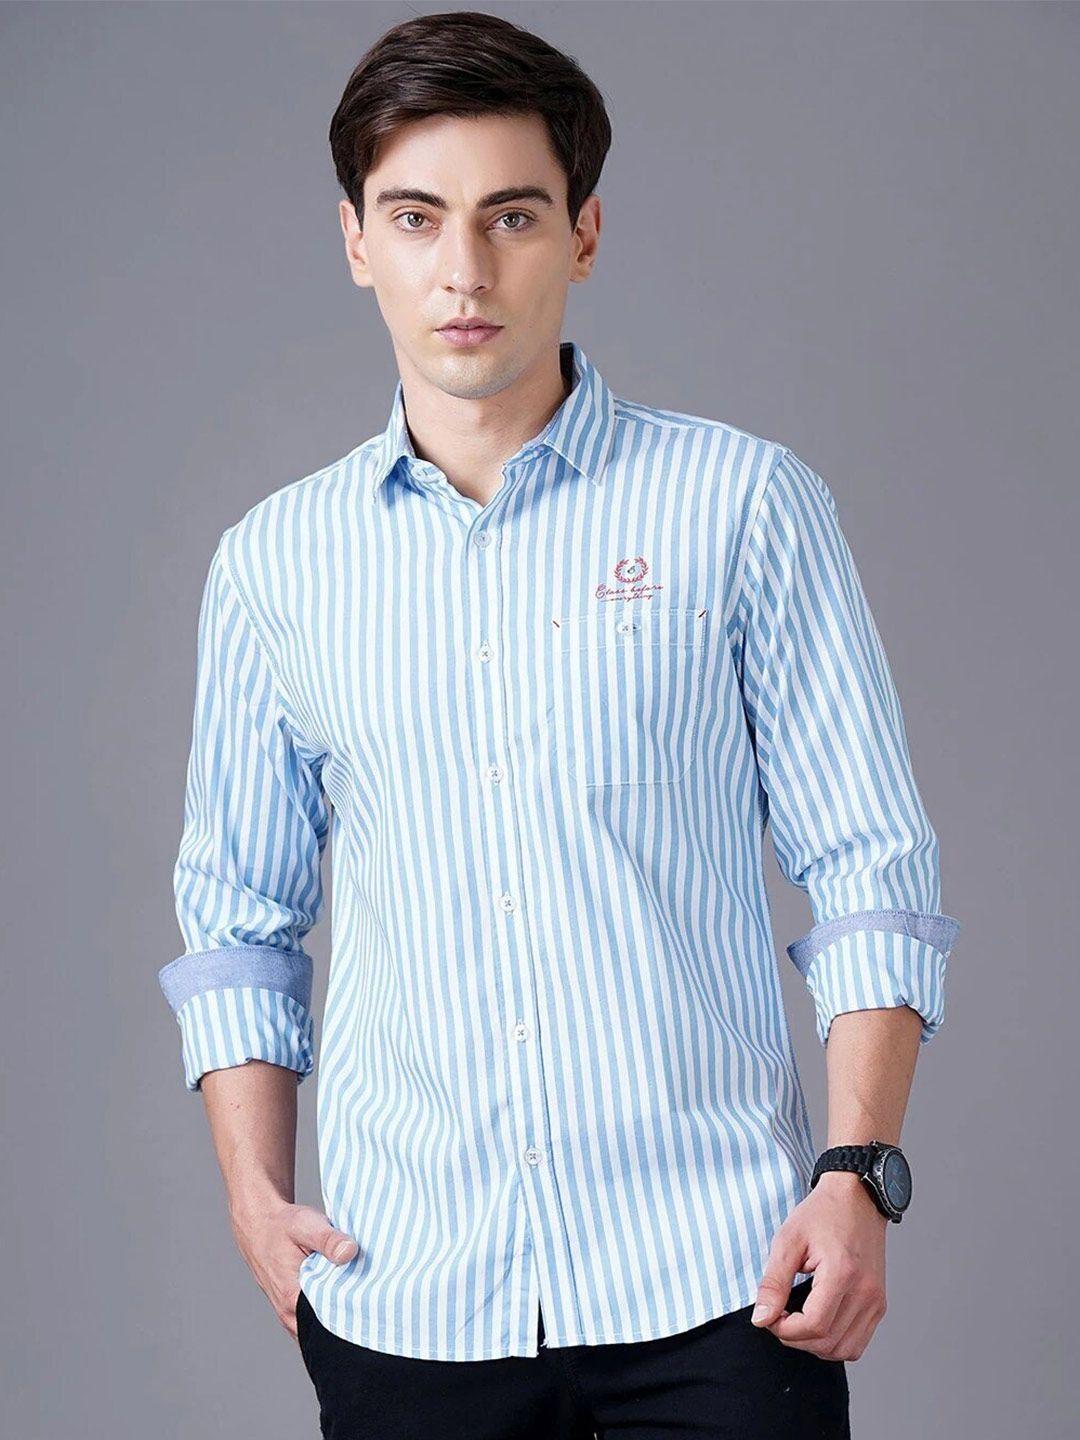 british-club-smart-slim-fit-vertical-striped-casual-pure-cotton-shirt